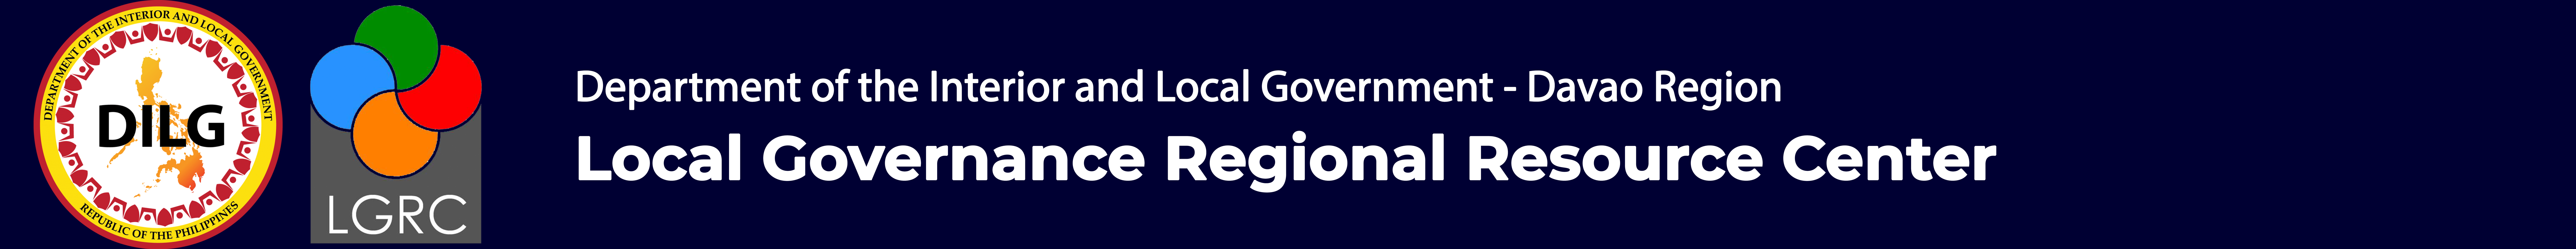 Local Governance Regional Resource Center 